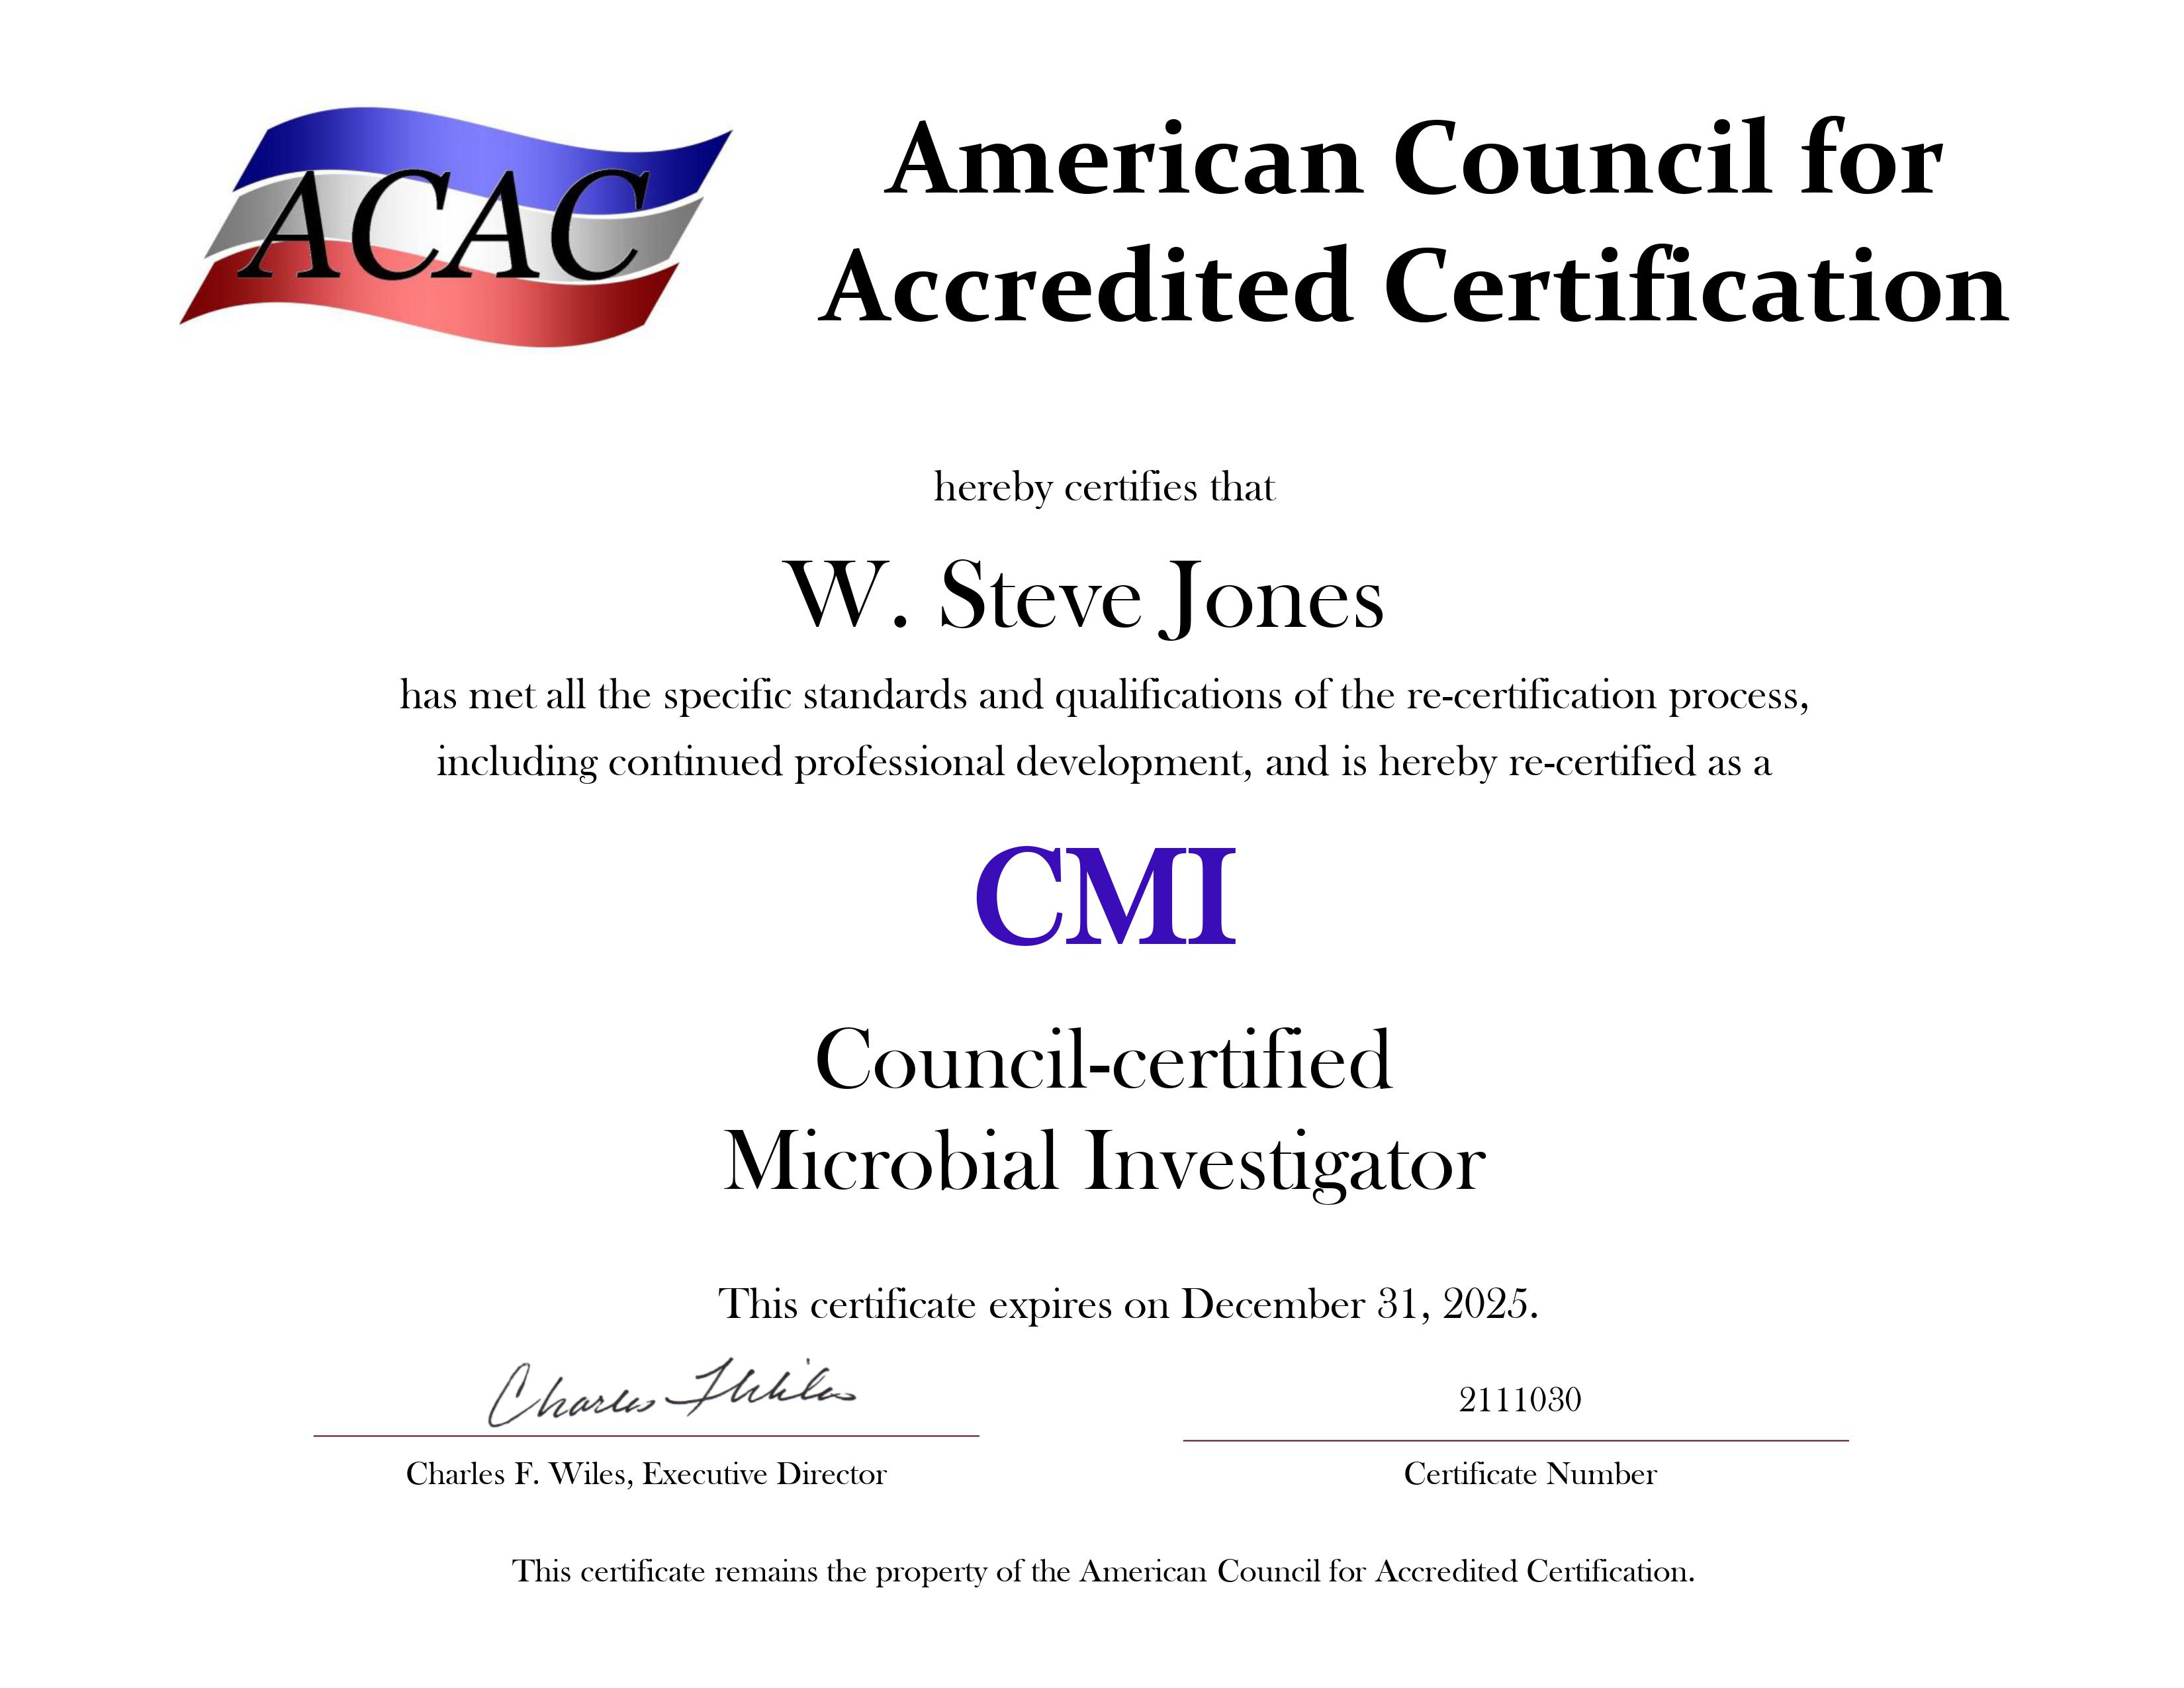 CMI Award Certificate